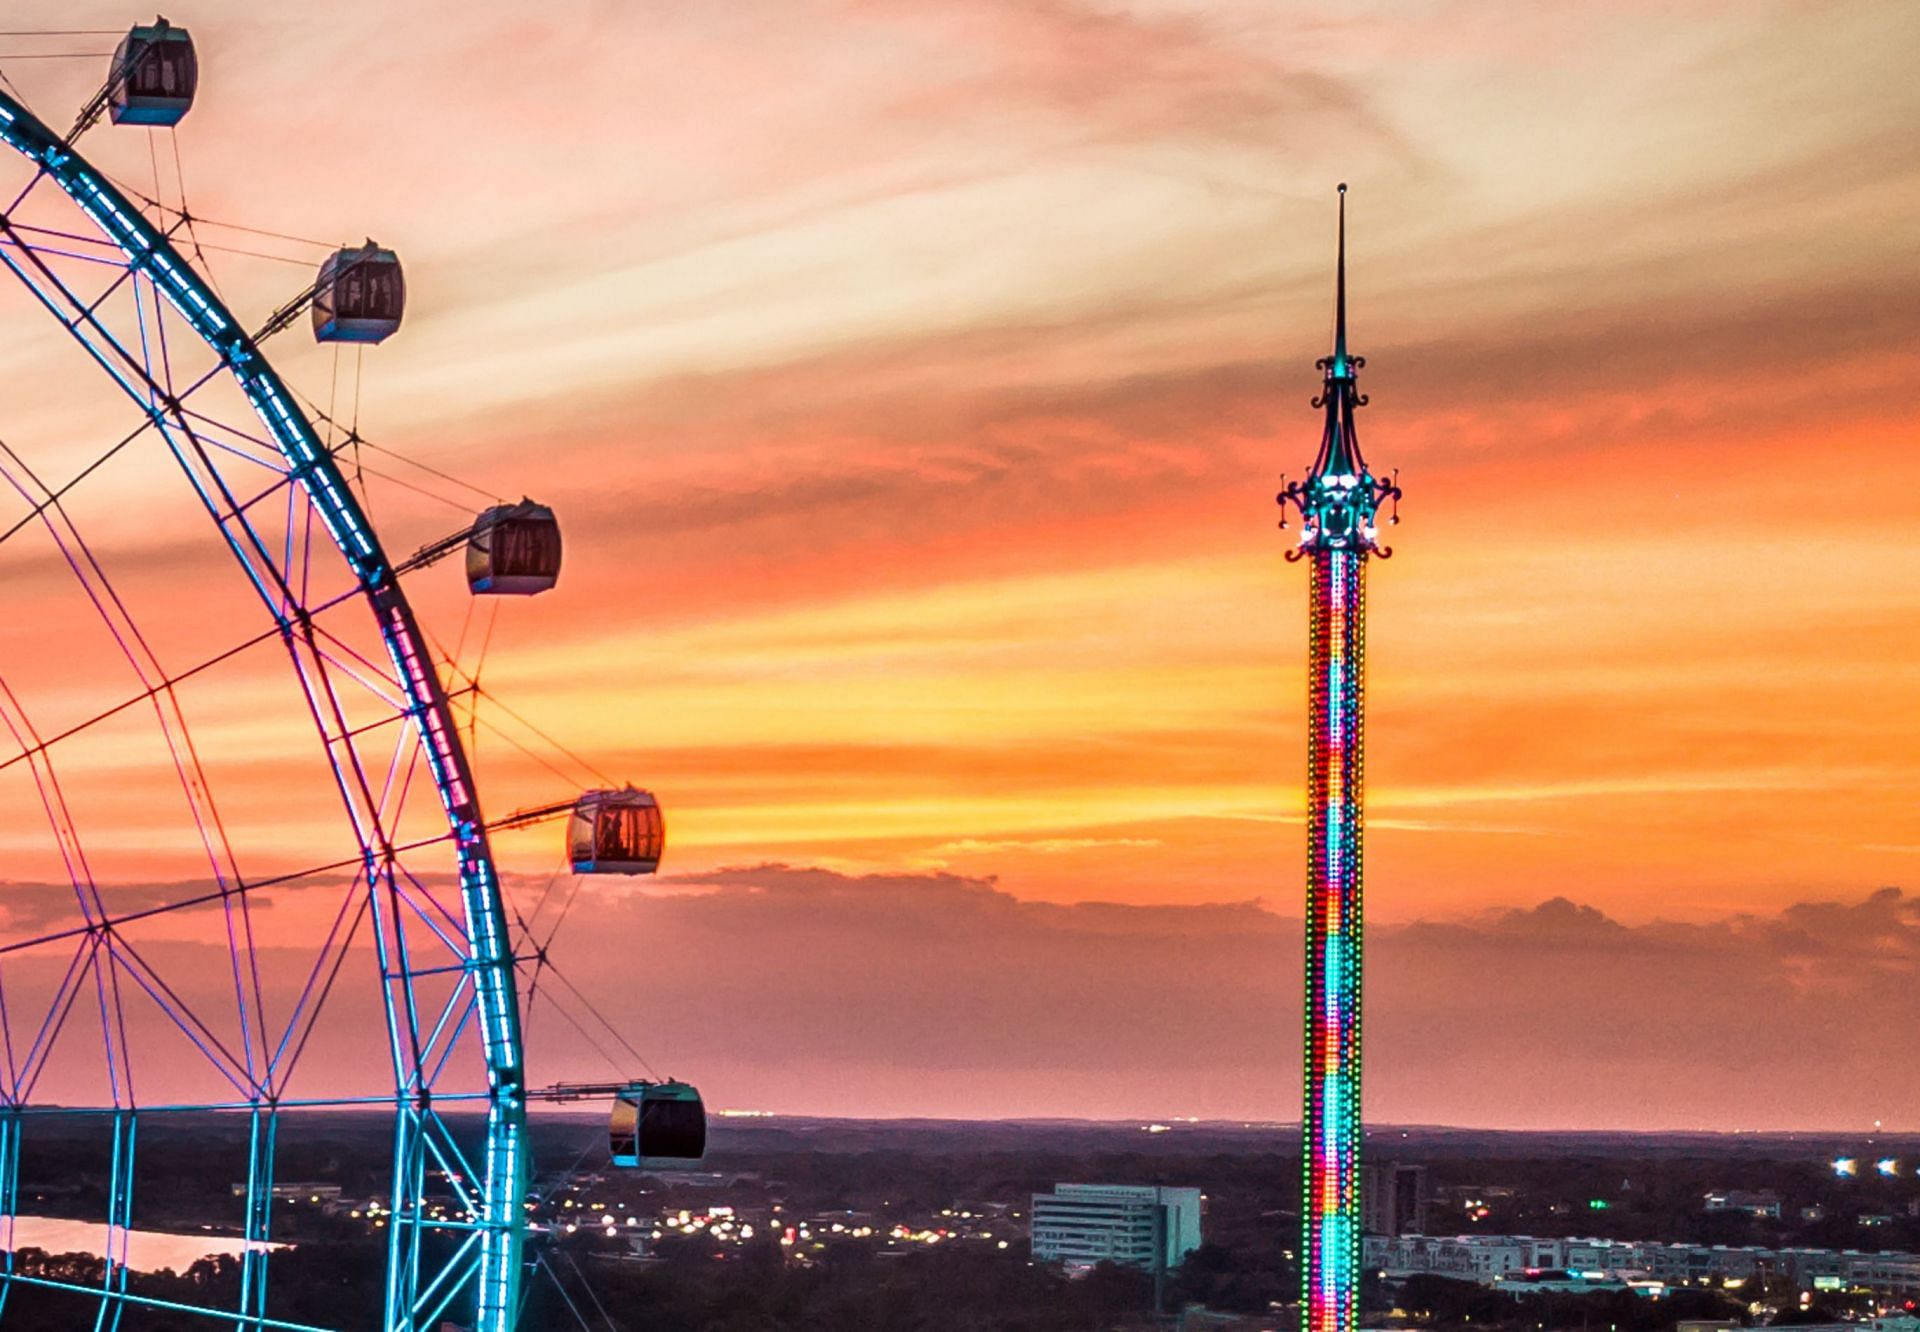 Icon Park Free Fall at Orlando, Florida (Image via Icon Park)